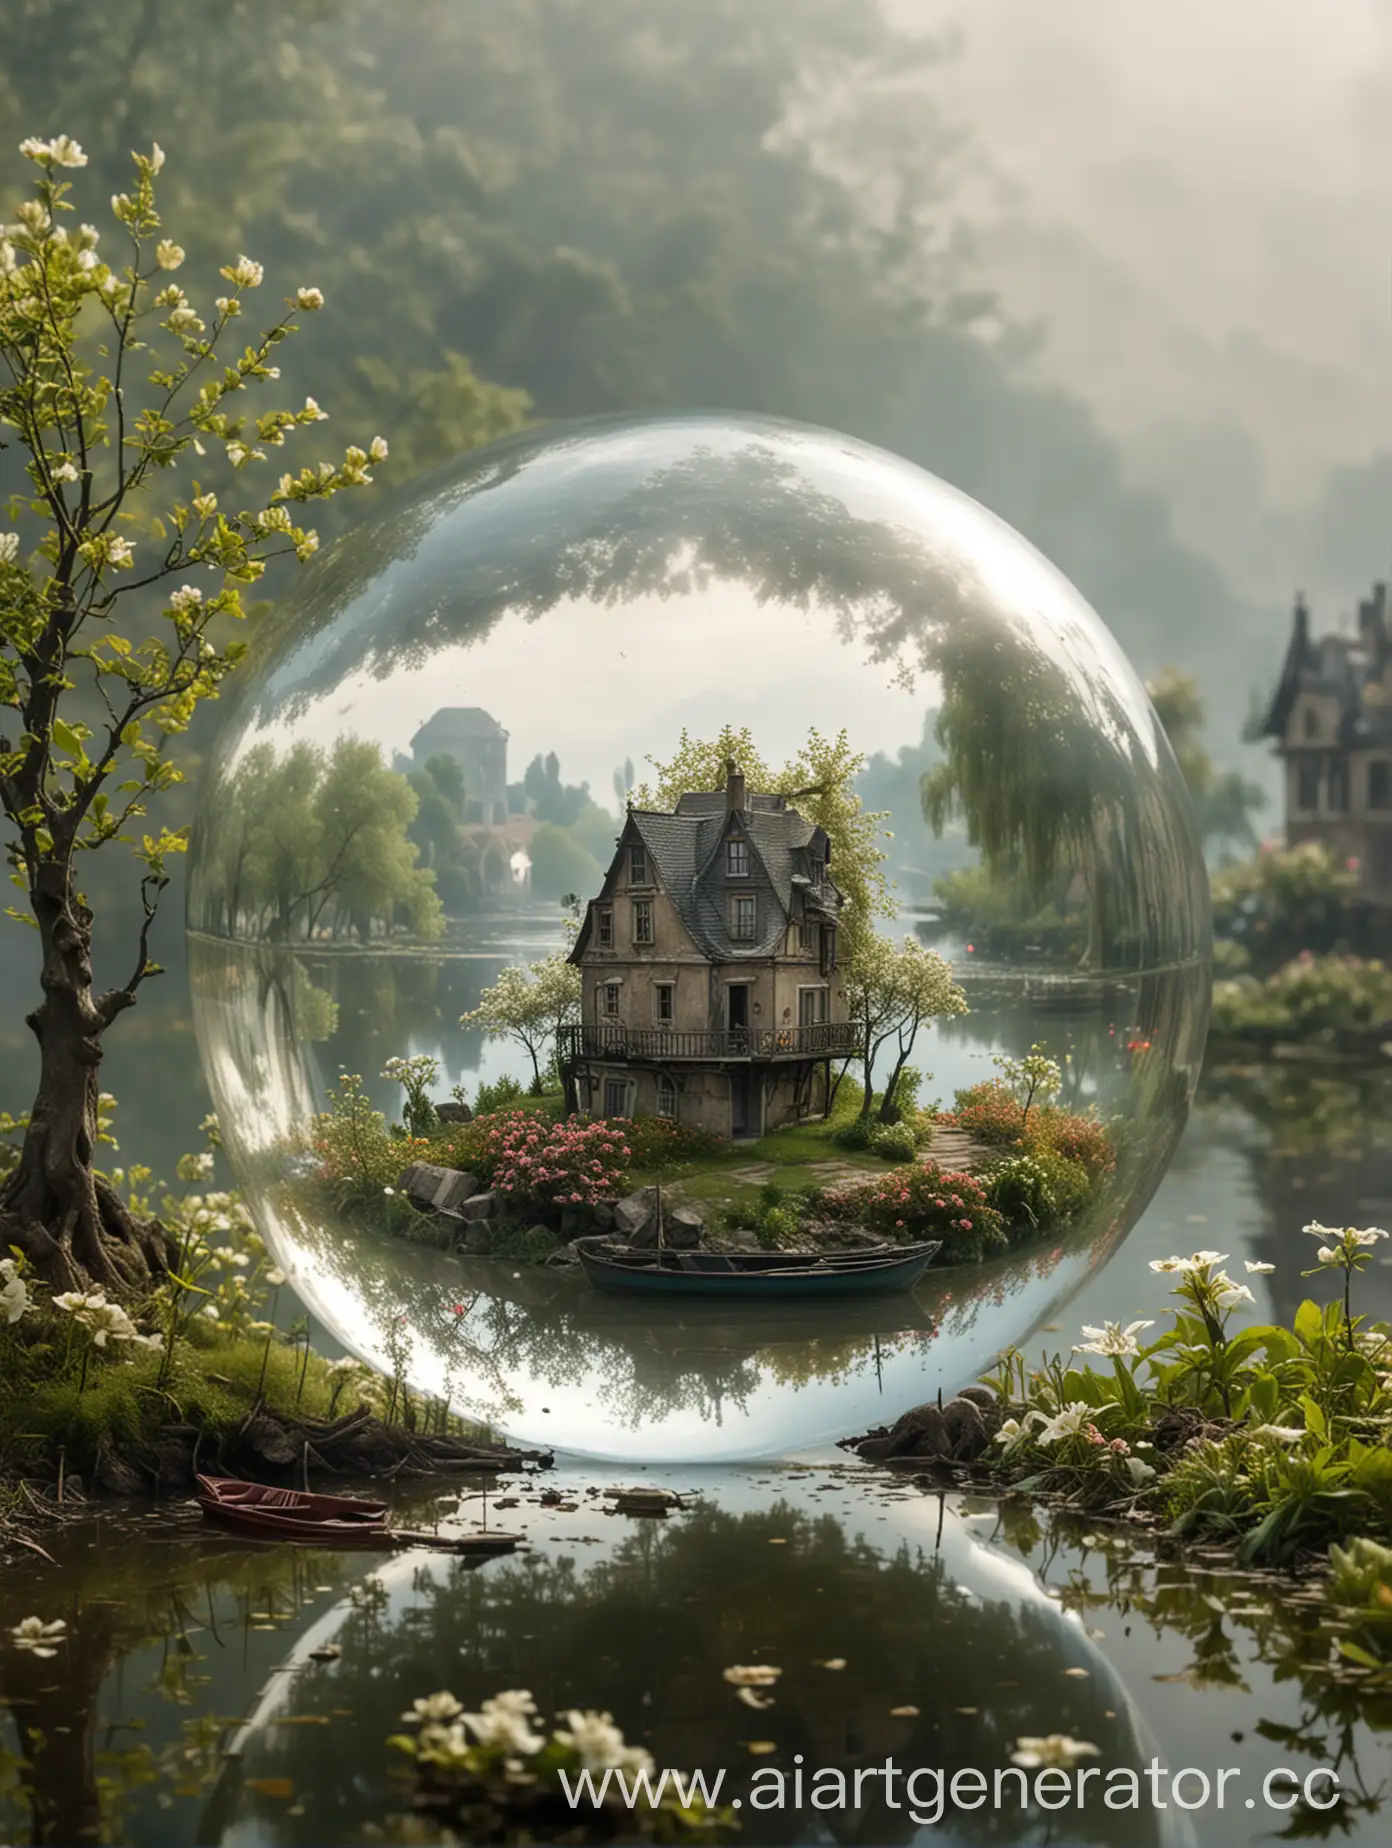 Enchanted-Glass-Sphere-Miniature-World-Amidst-Urban-Chaos